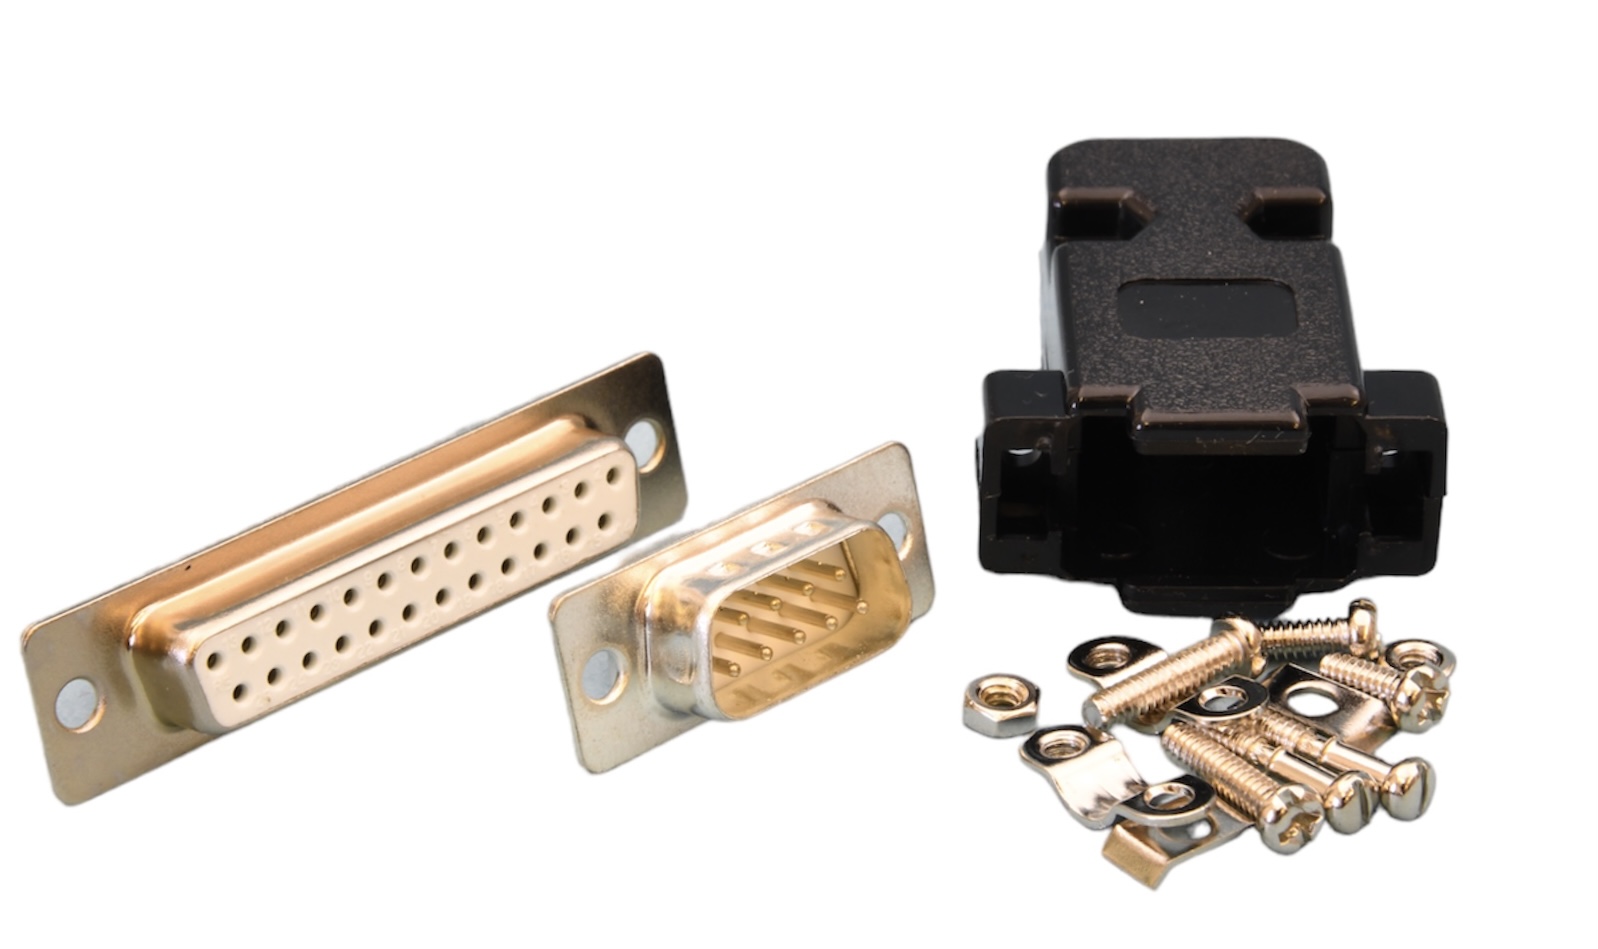 A23033 15 Way Plug and Socket Set